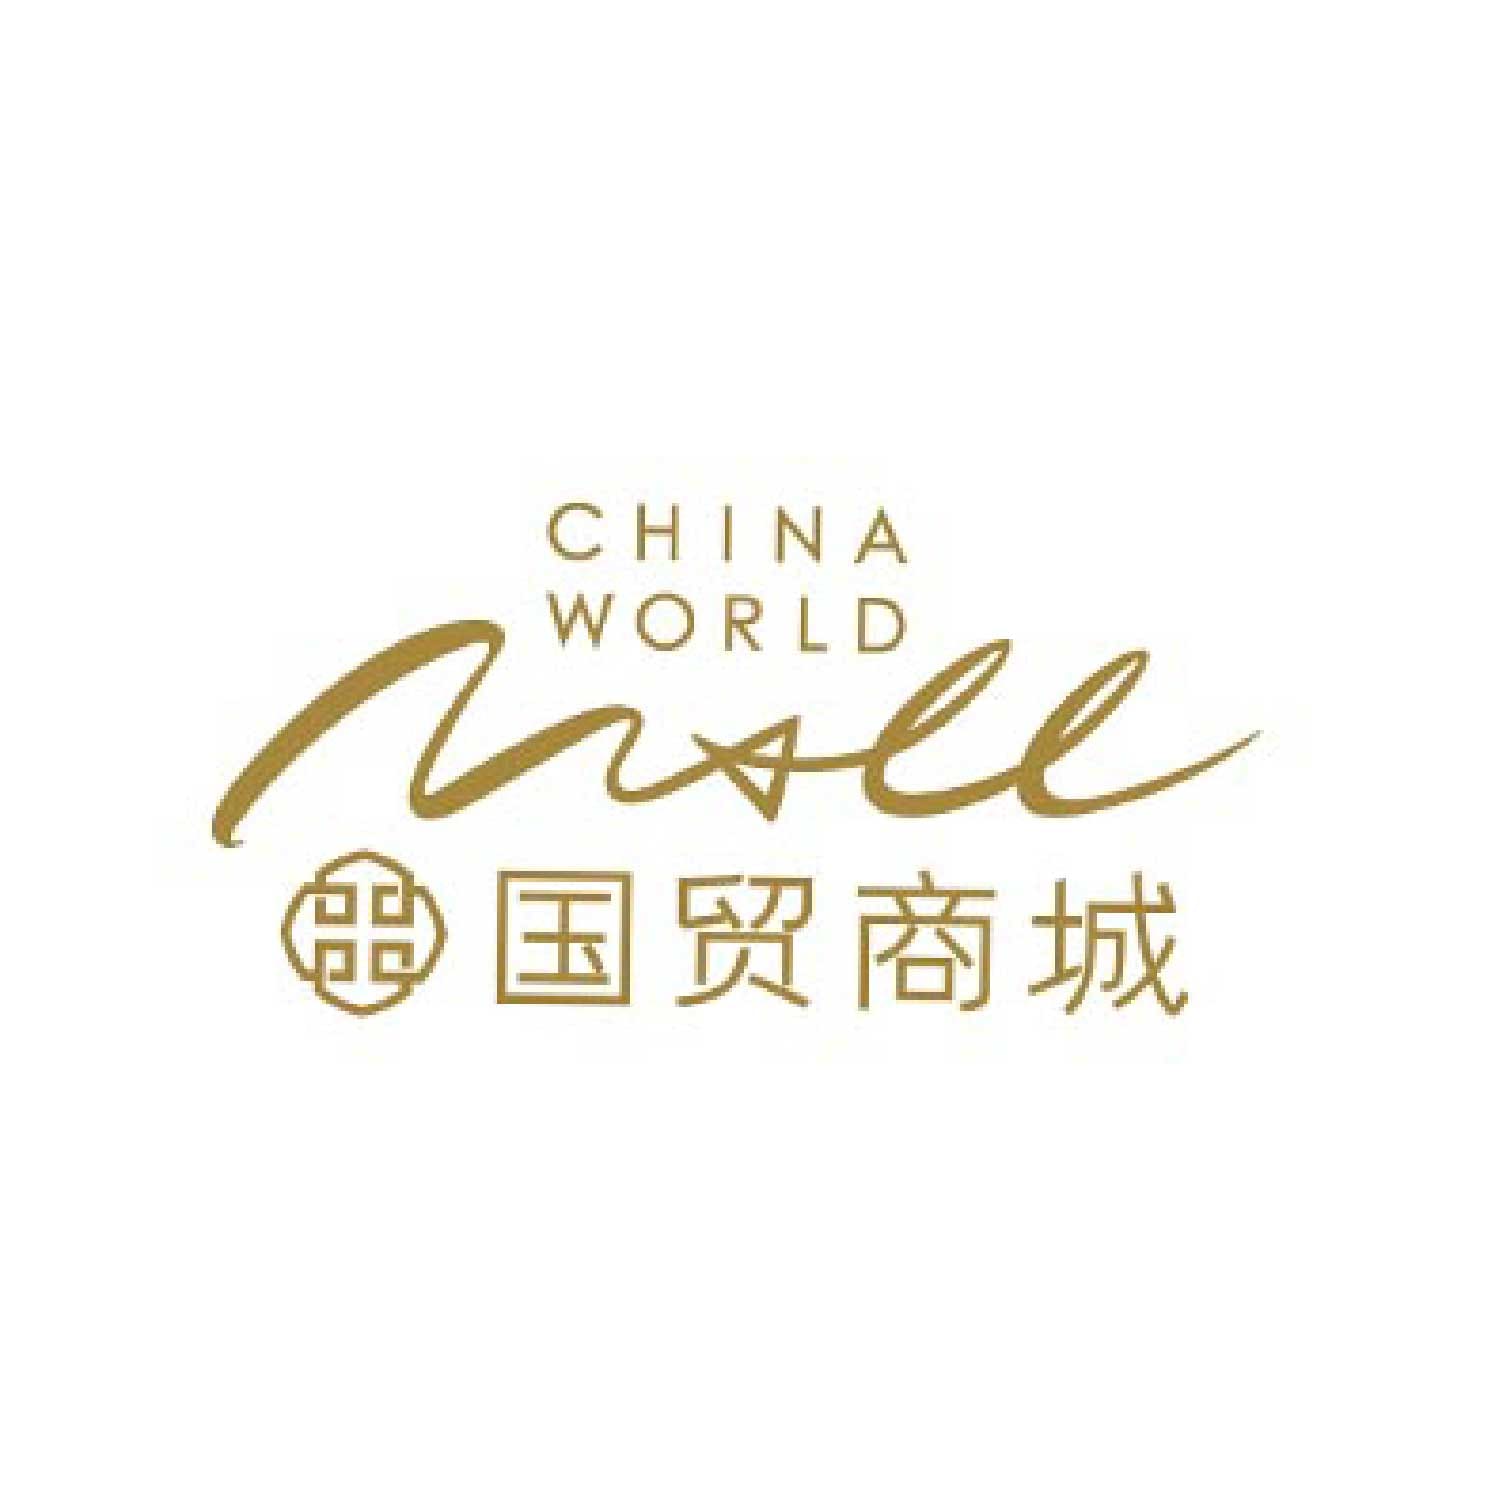 China World Mall LOGO thumb lrg-01 - World Branding Awards